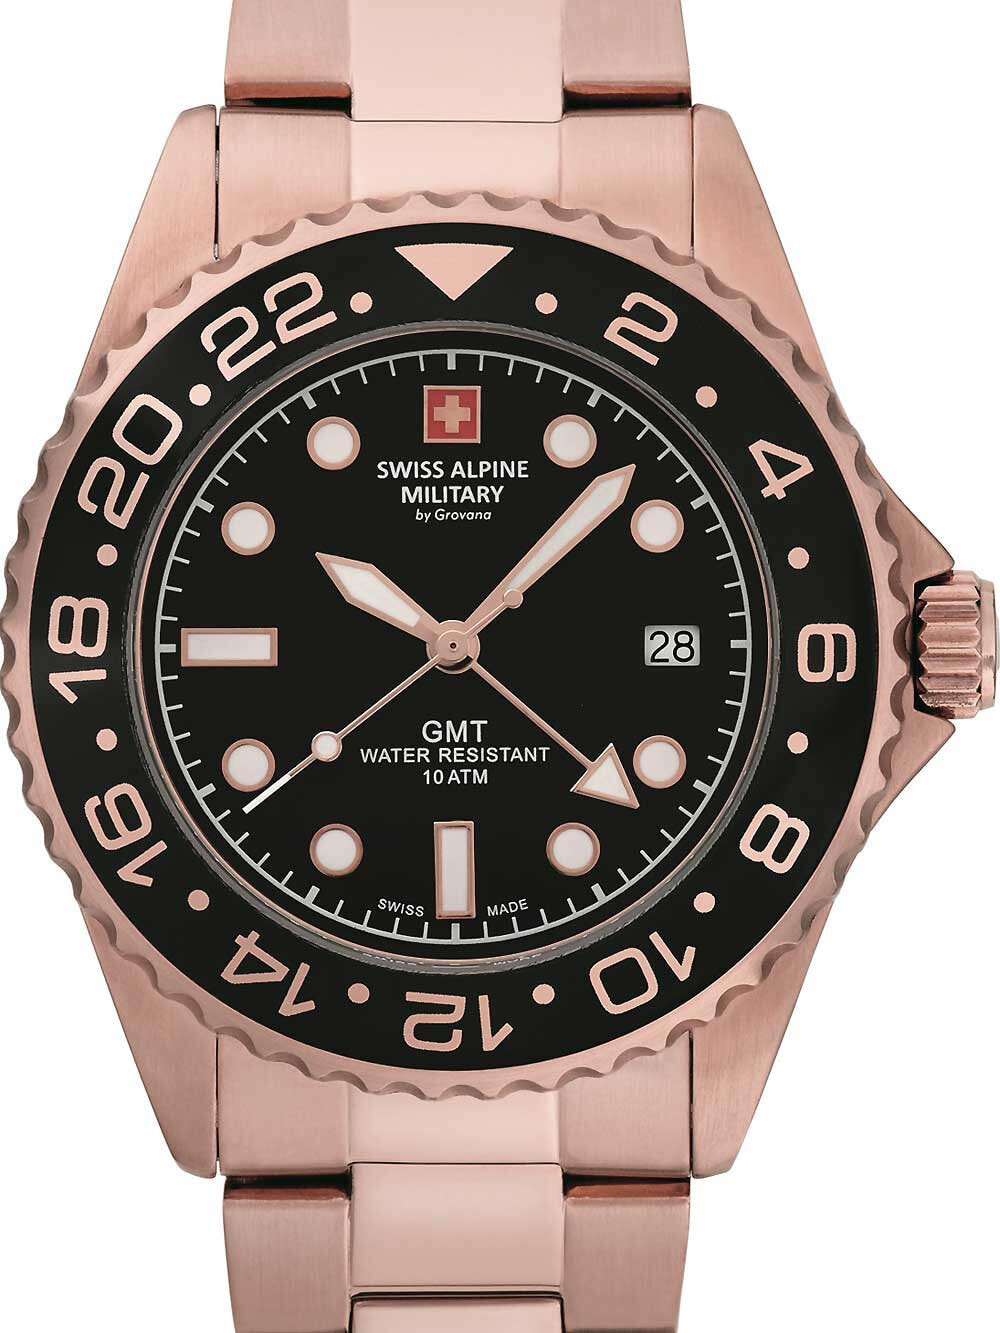 Мужские наручные часы с золотым браслетом Swiss Alpine Military 7052.1167 GMT diver 42mm 10ATM